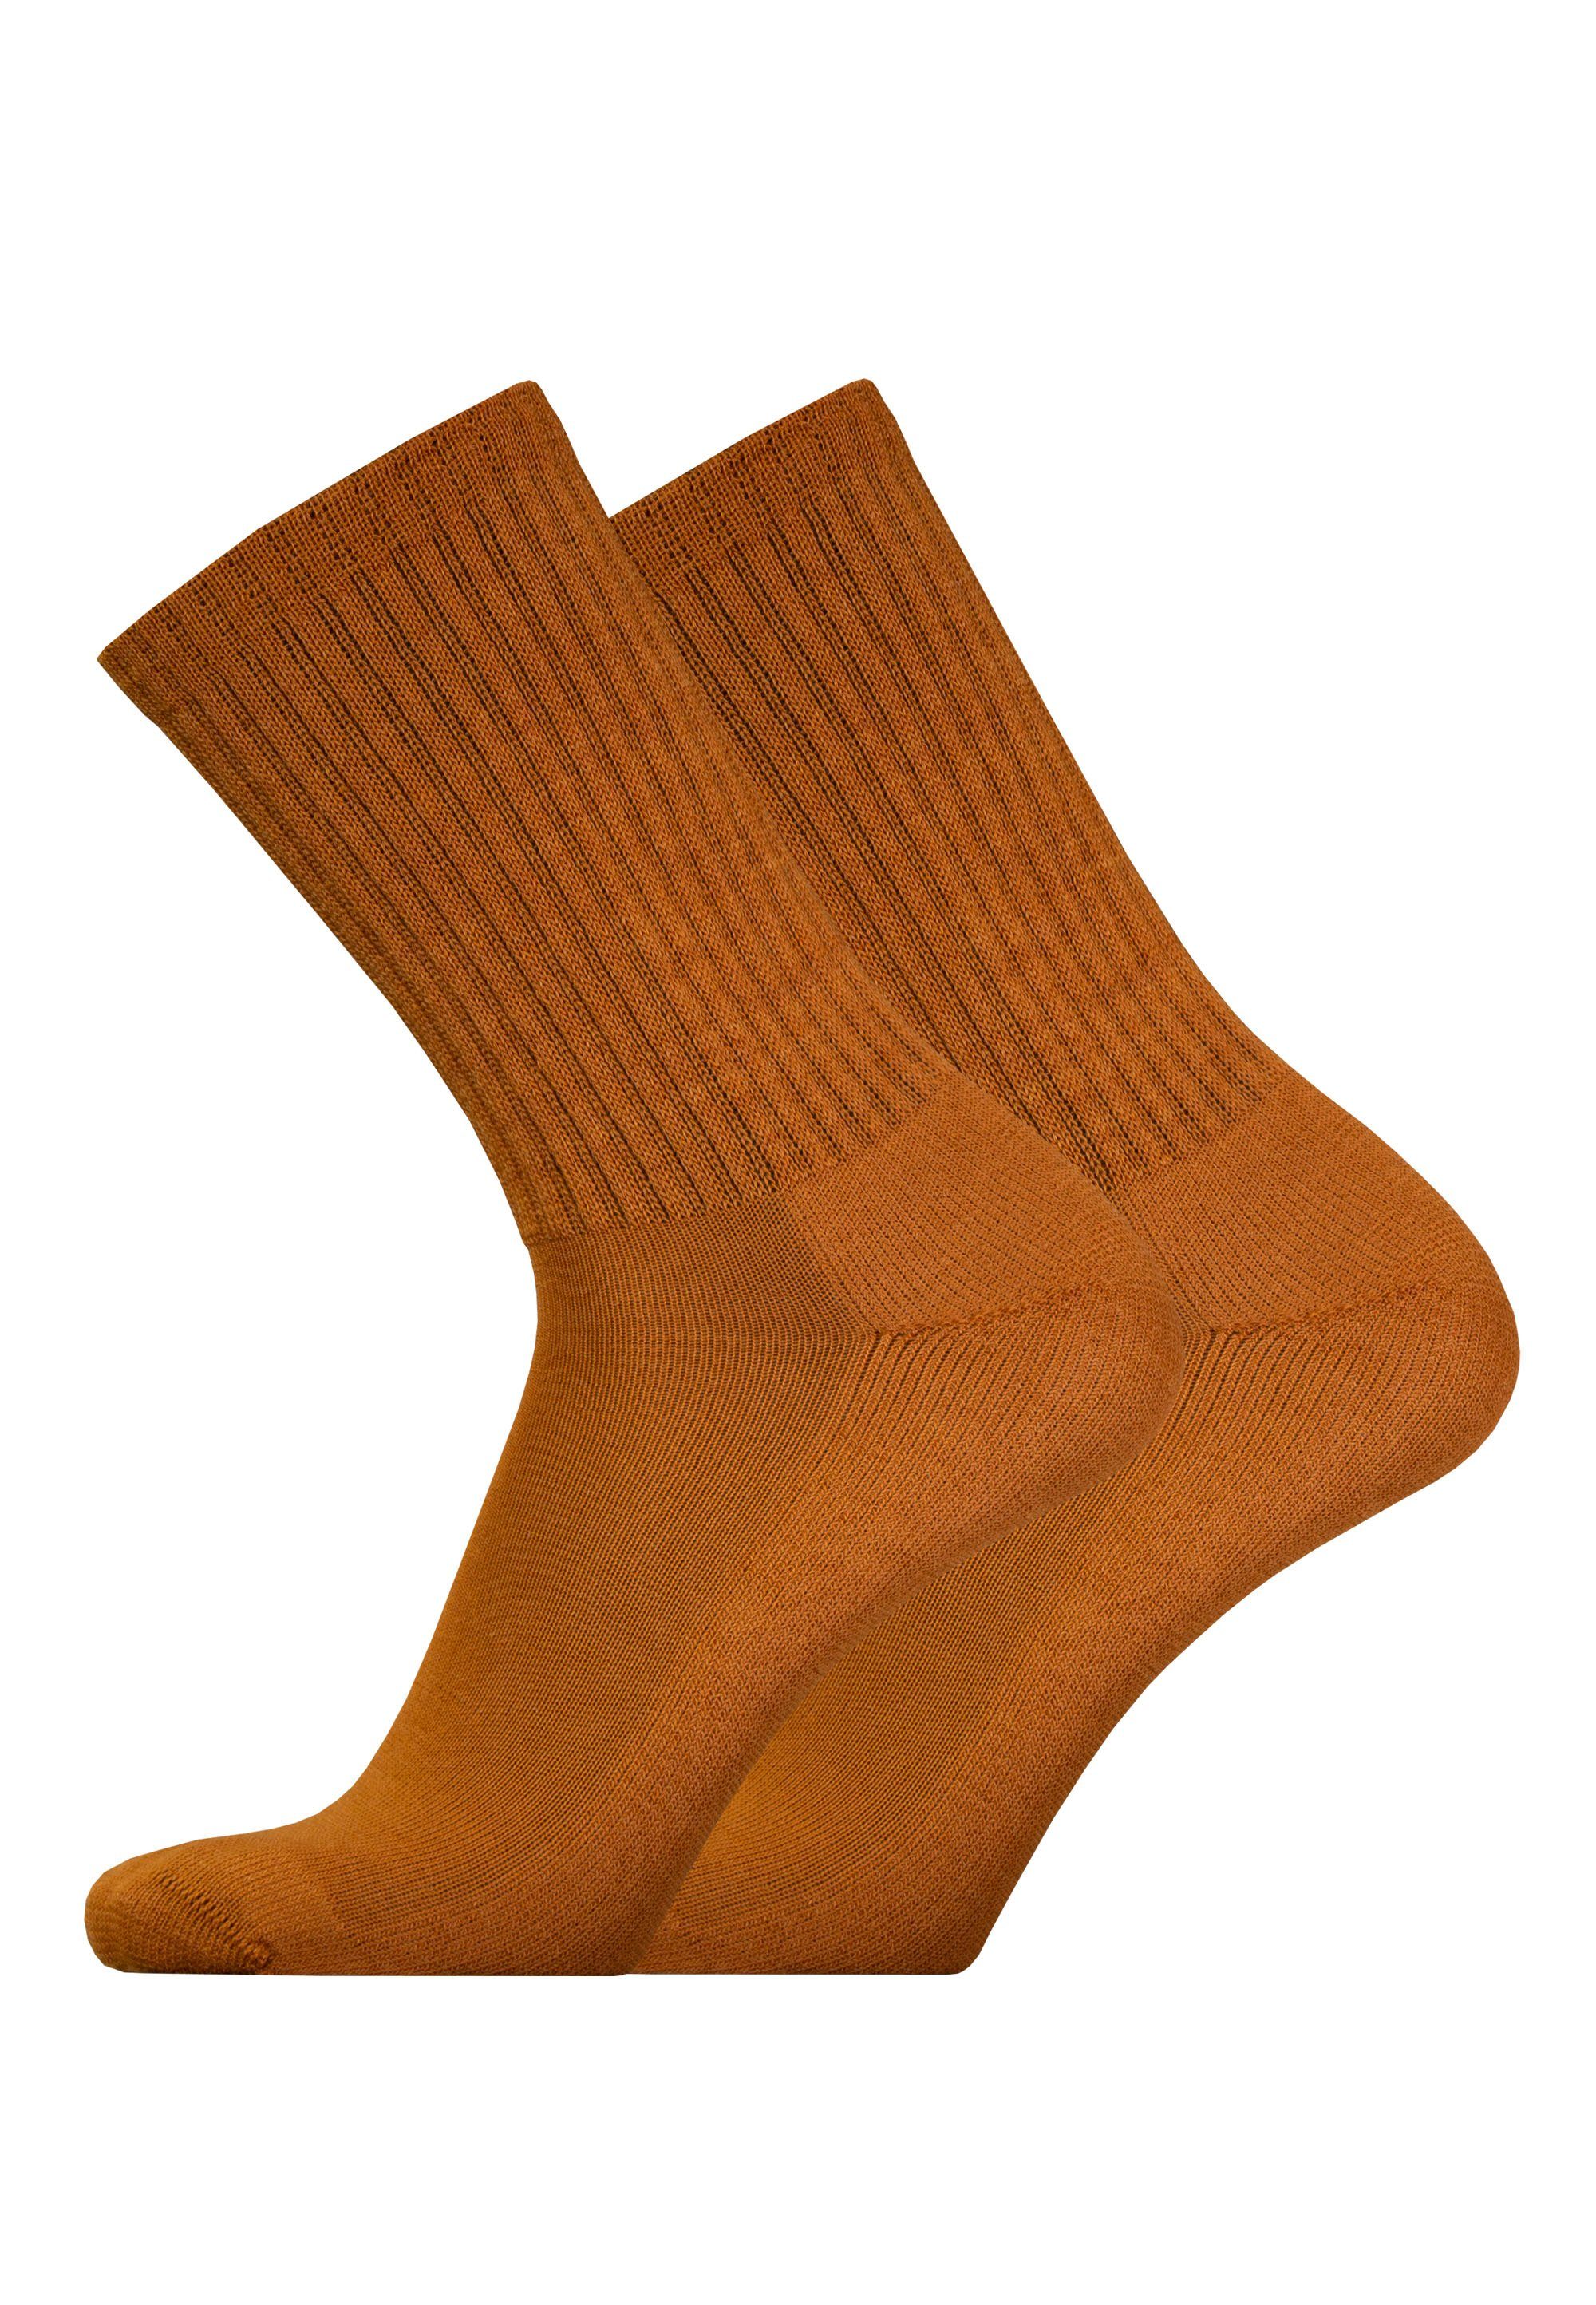 (2-Paar) in atmungsaktiver UphillSport Socken orange Pack MERINO SPORT Qualität 2er